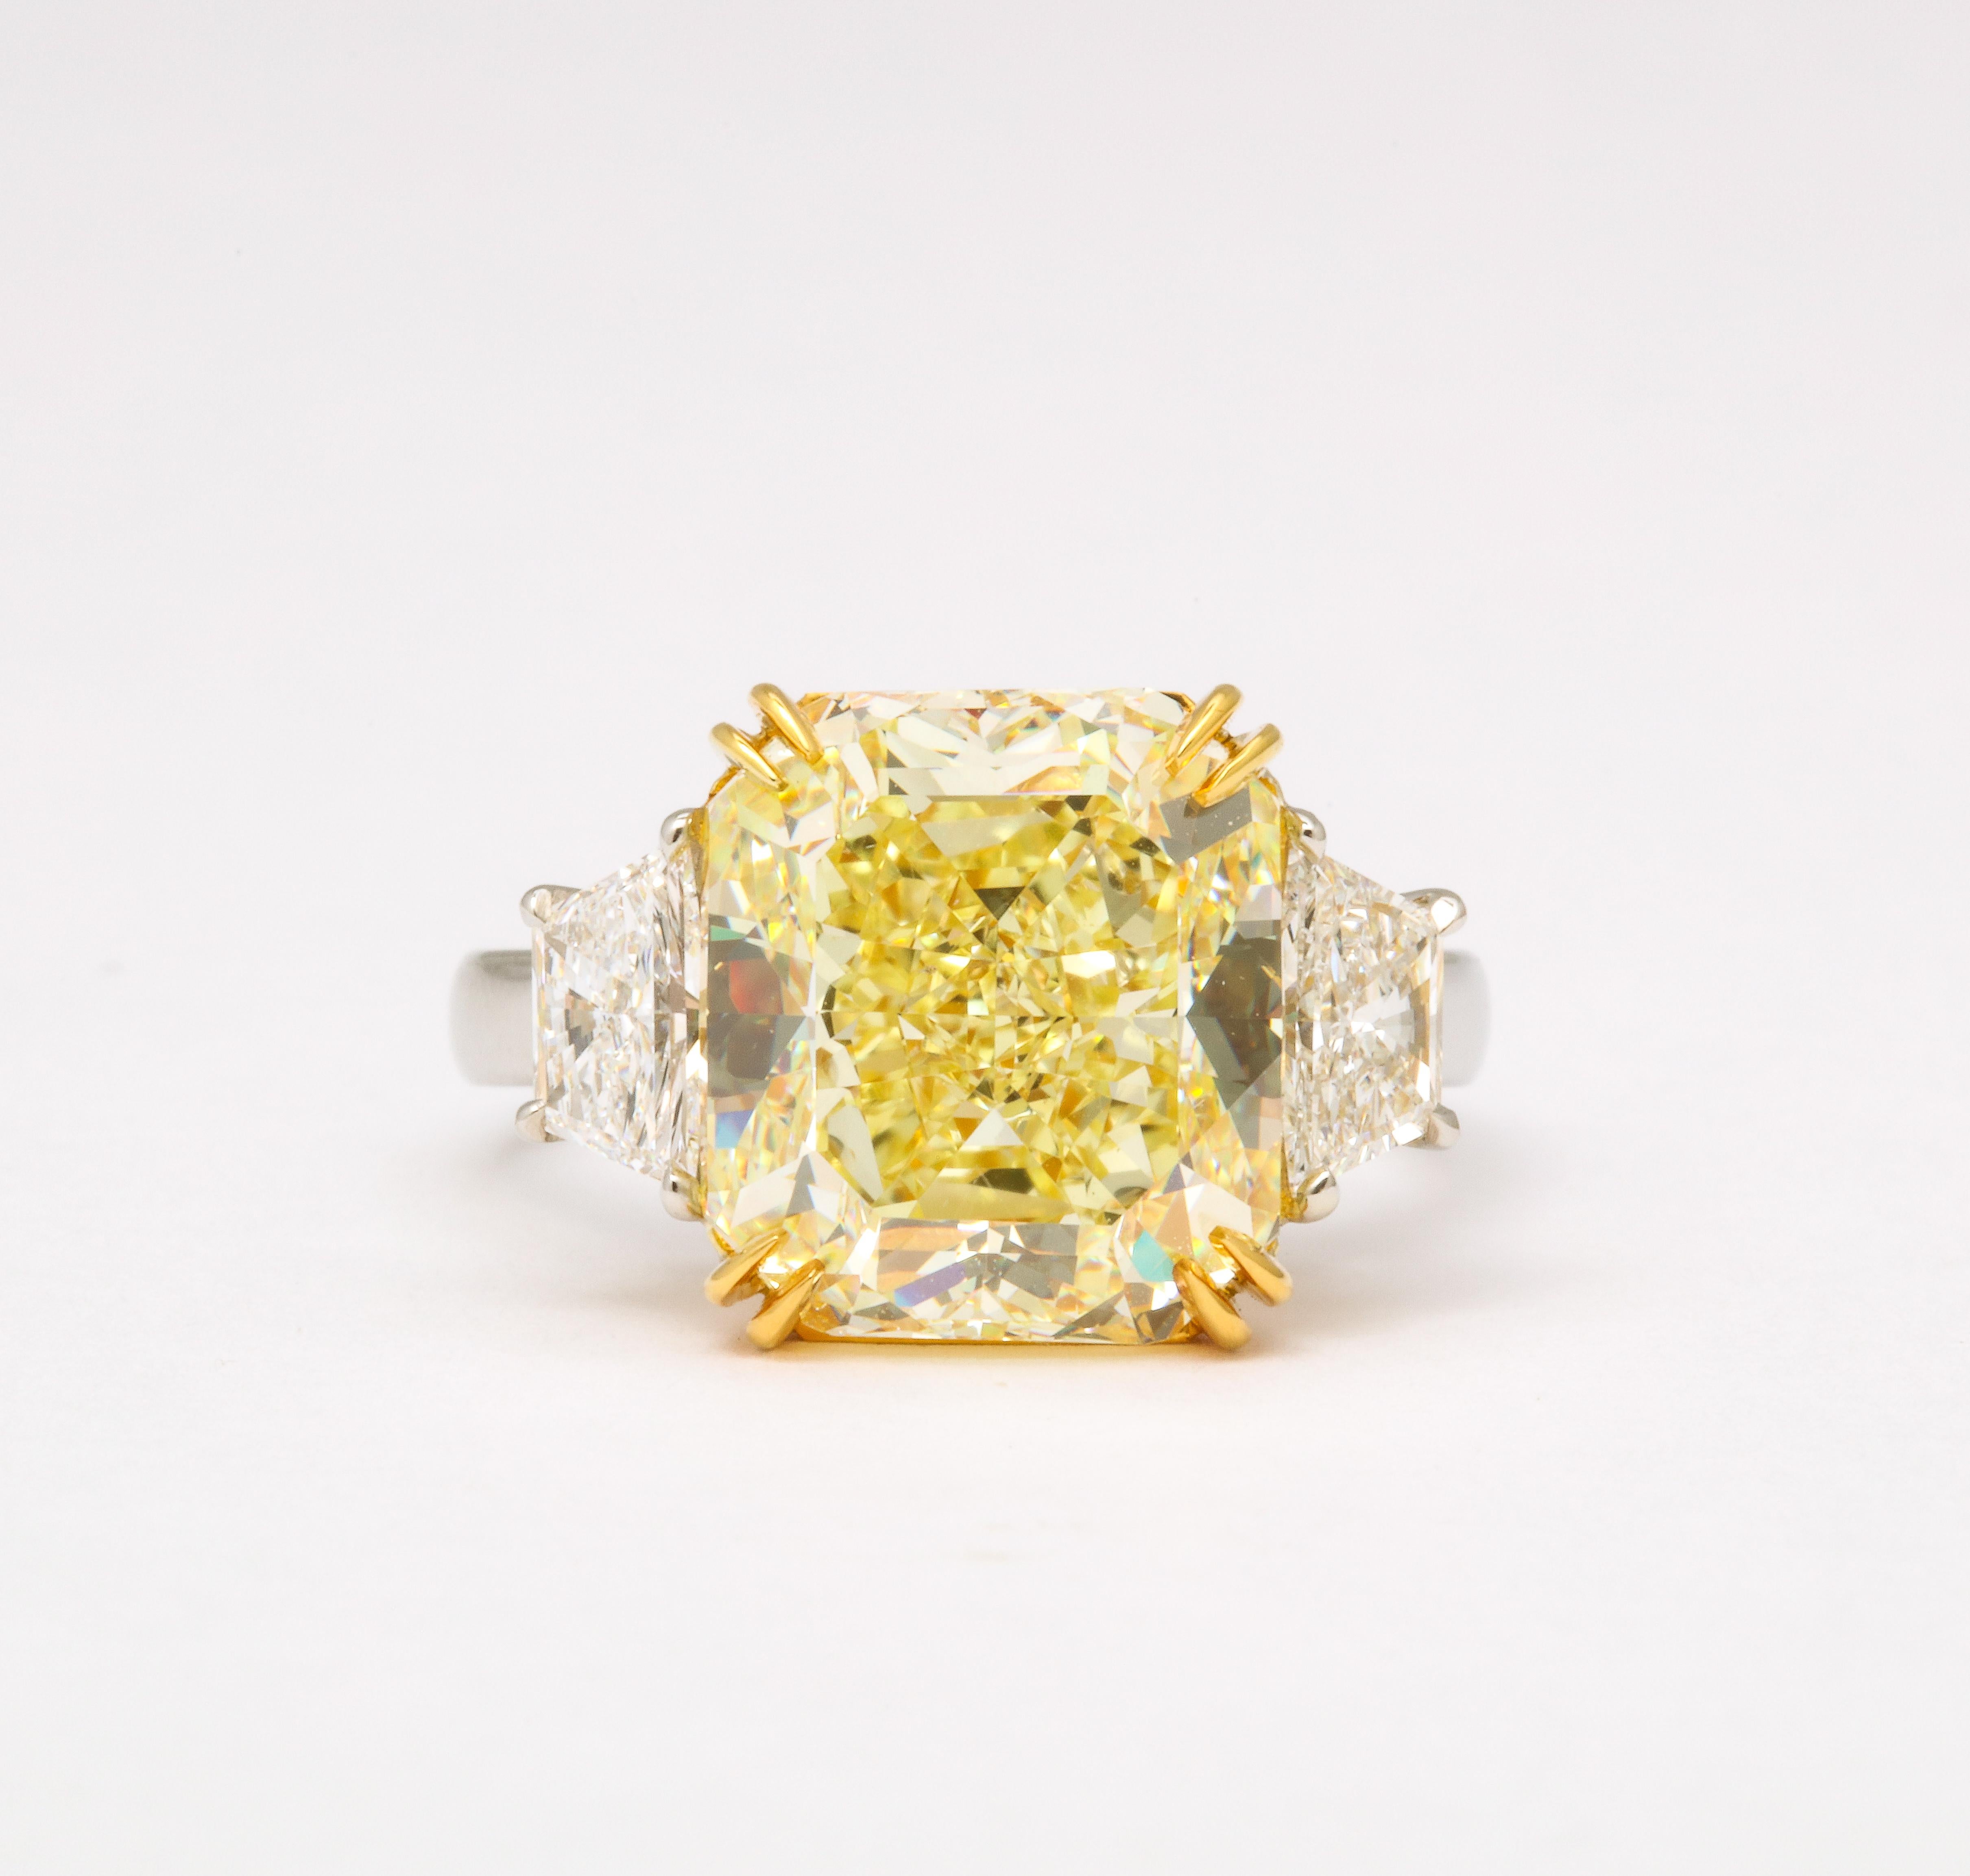 8 carat yellow diamond ring